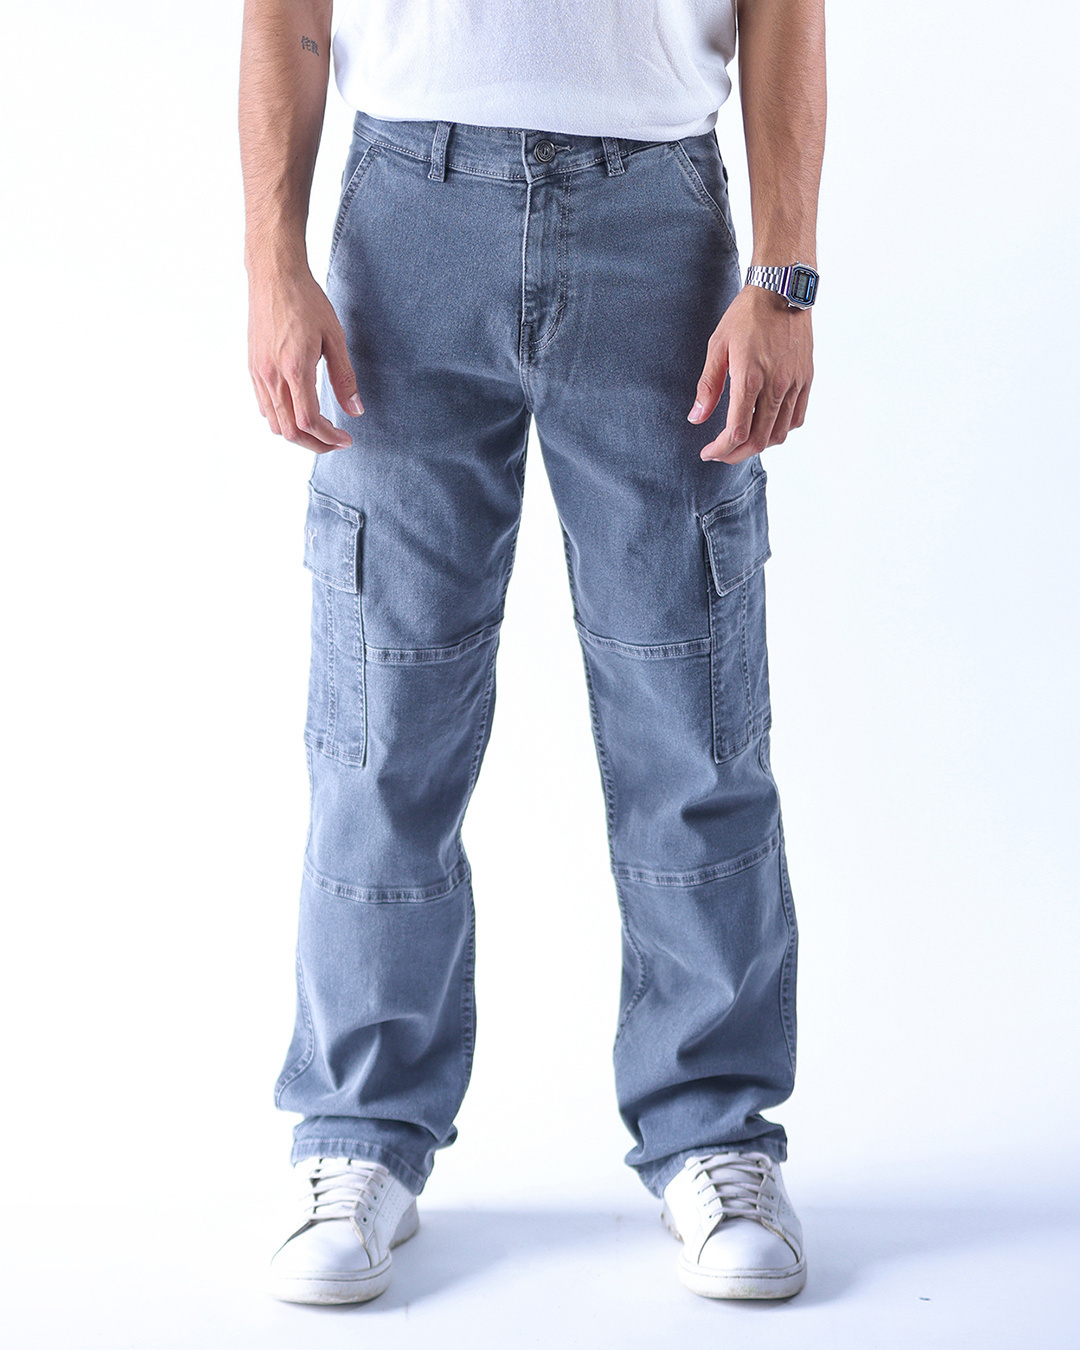 Buy Men's Grey Relaxed Fit Cargo Jeans Online at Bewakoof